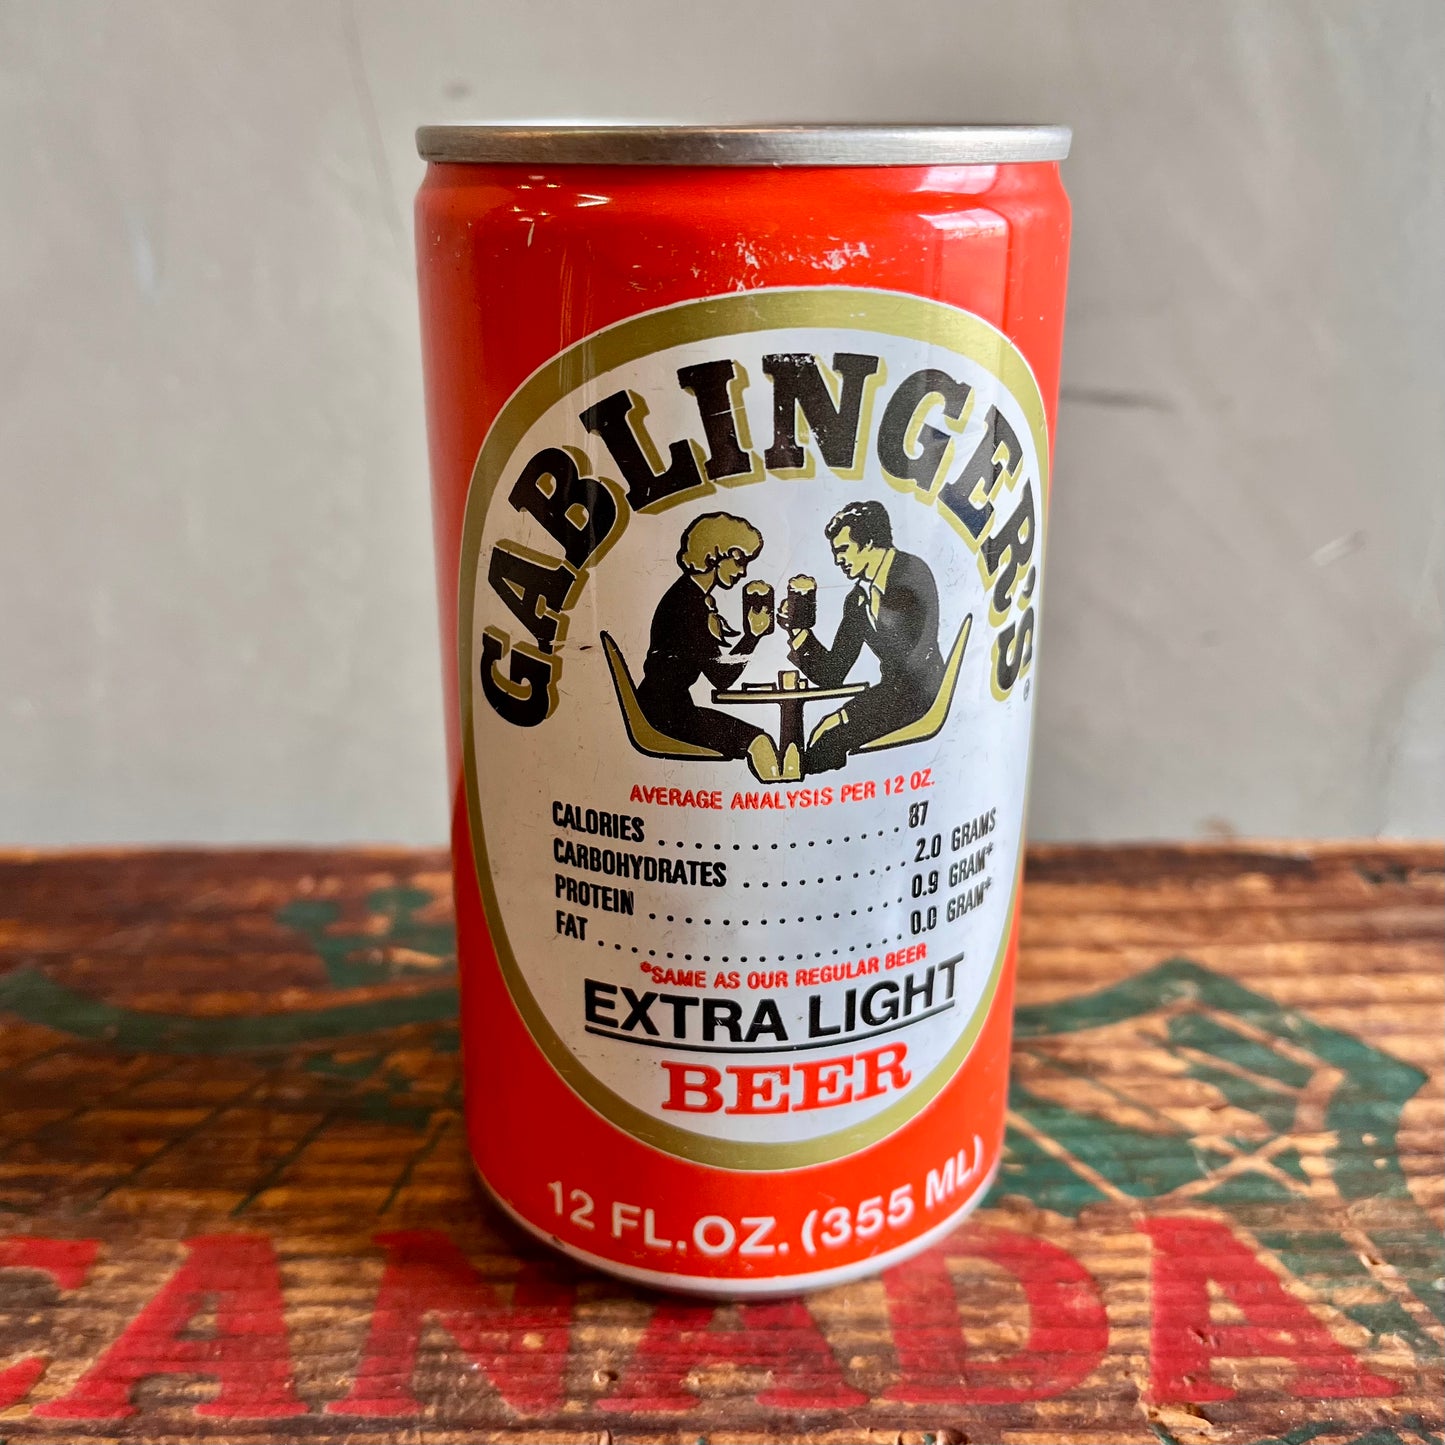 【USA vintage】GABLINGER’S EXTRA LIGHT BEER CAN